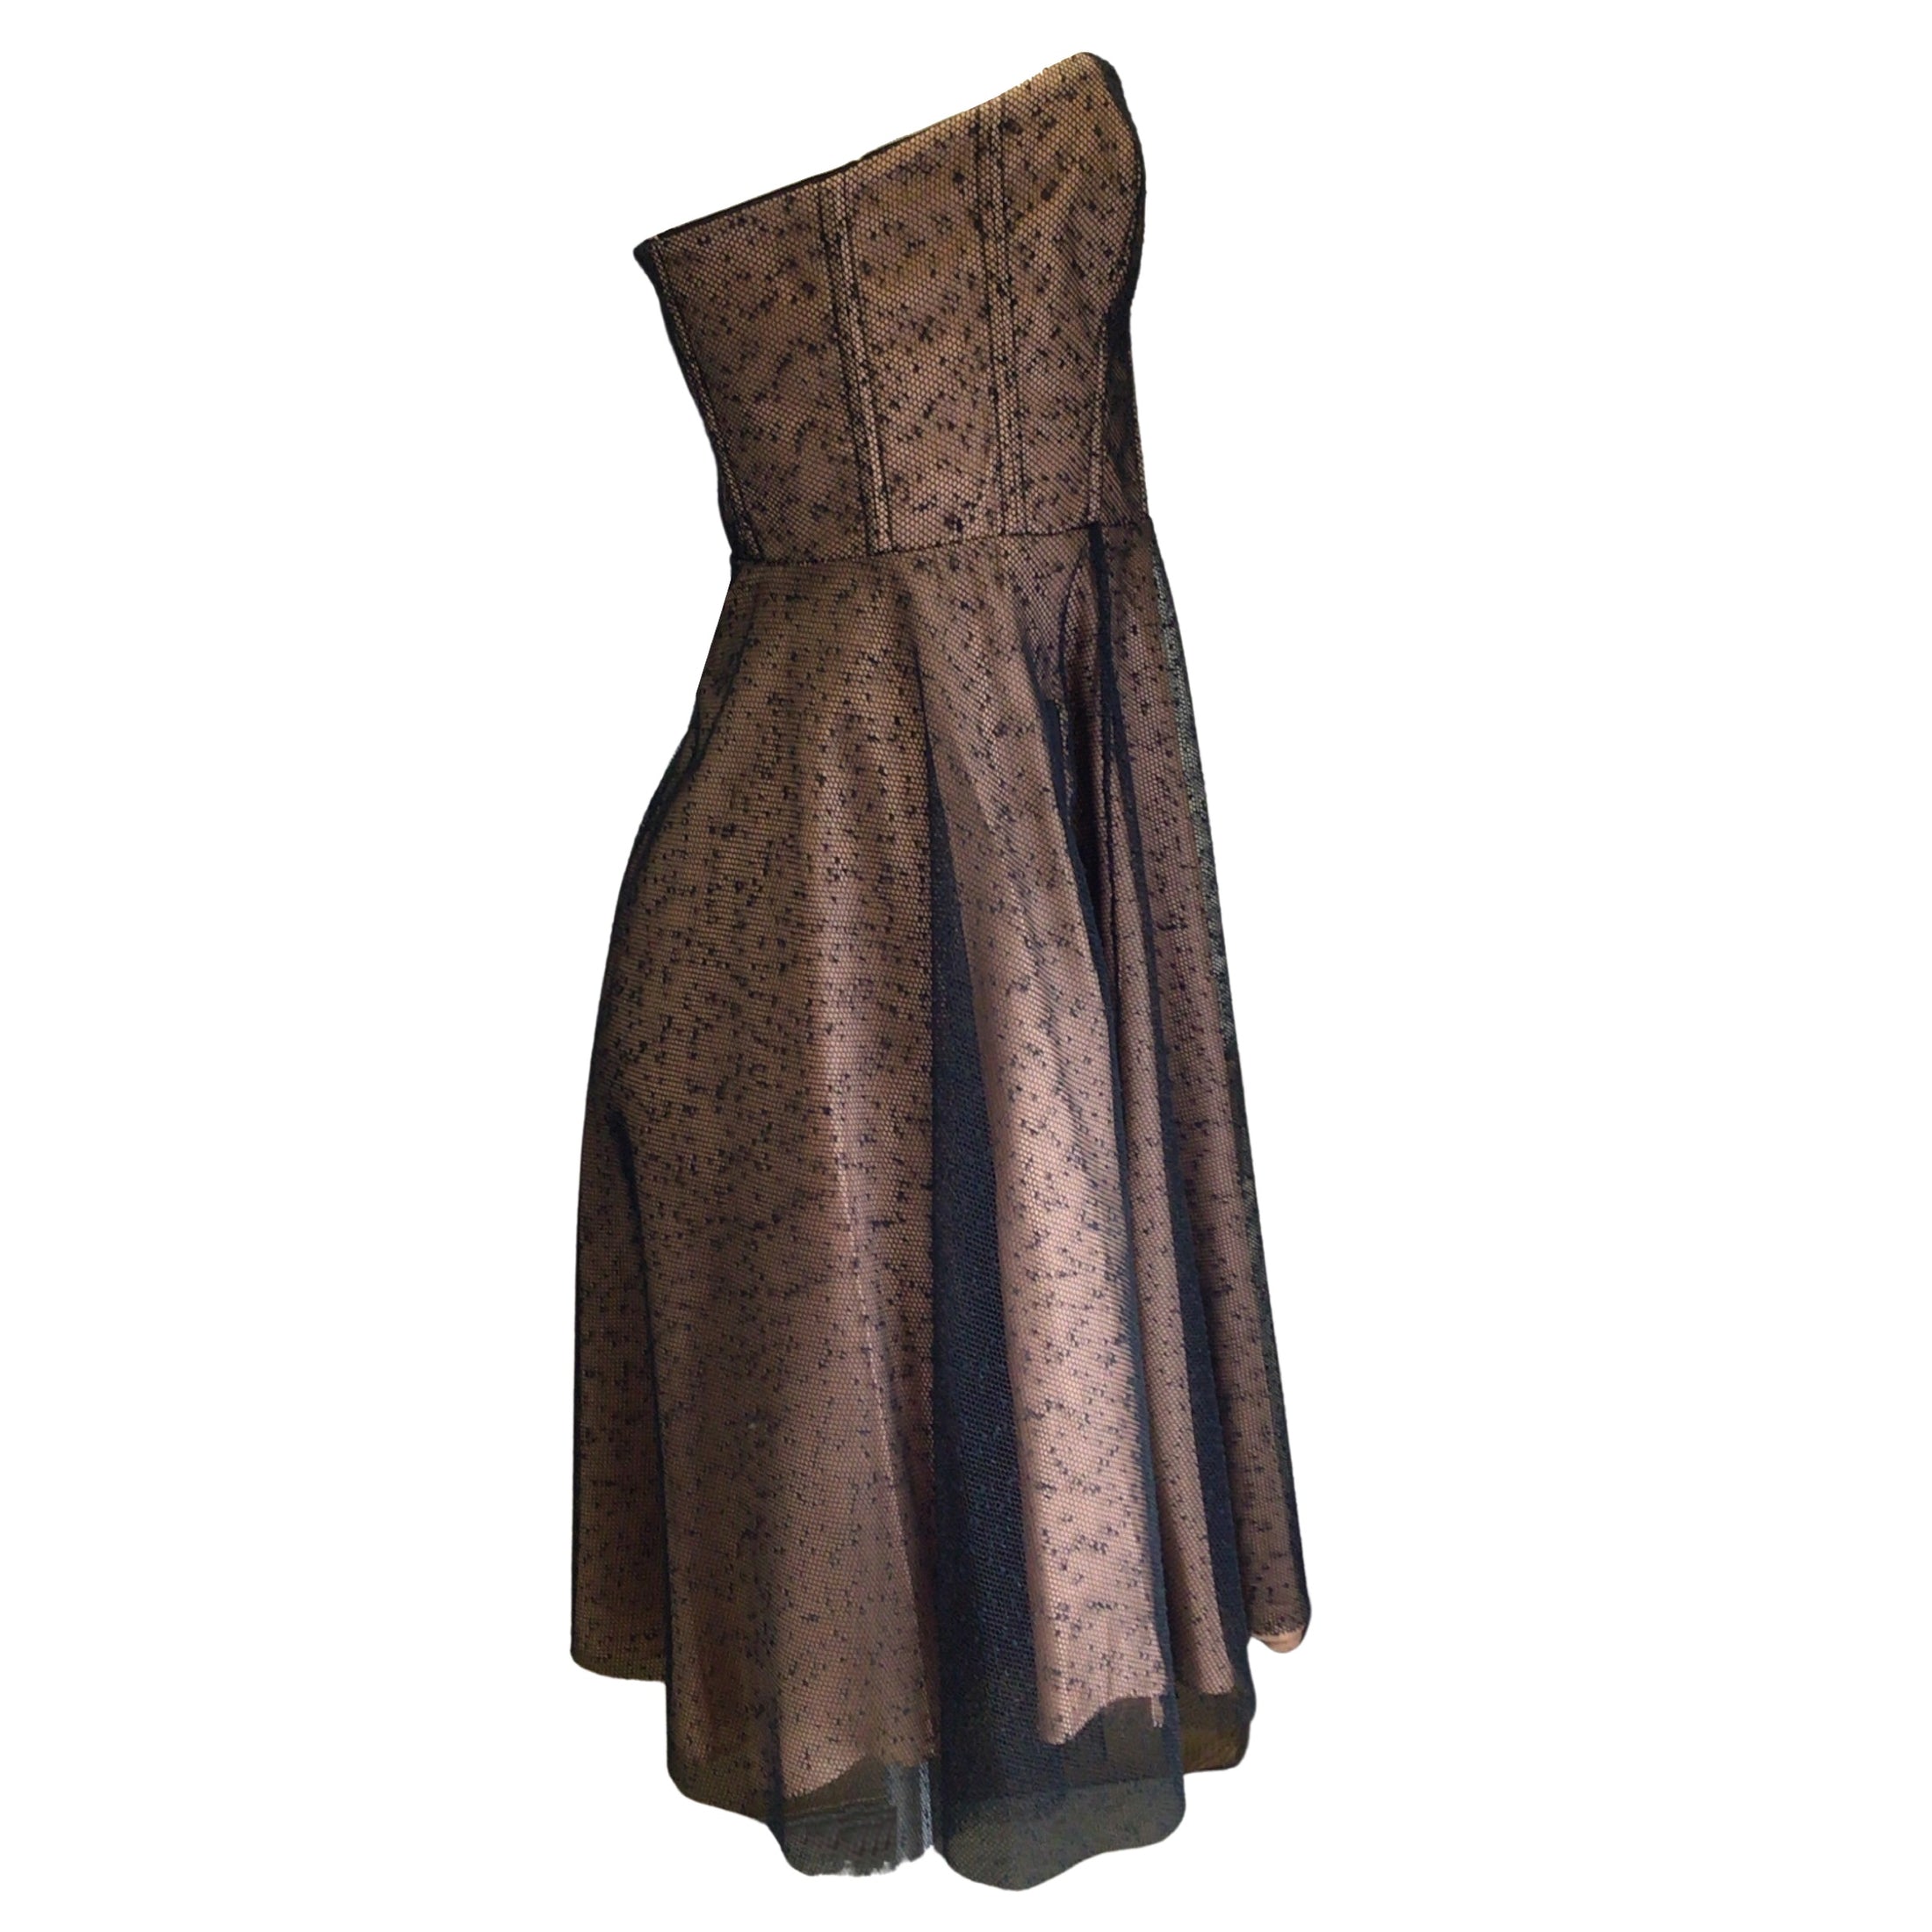 Carven Black / Beige Strapless Lace Dress